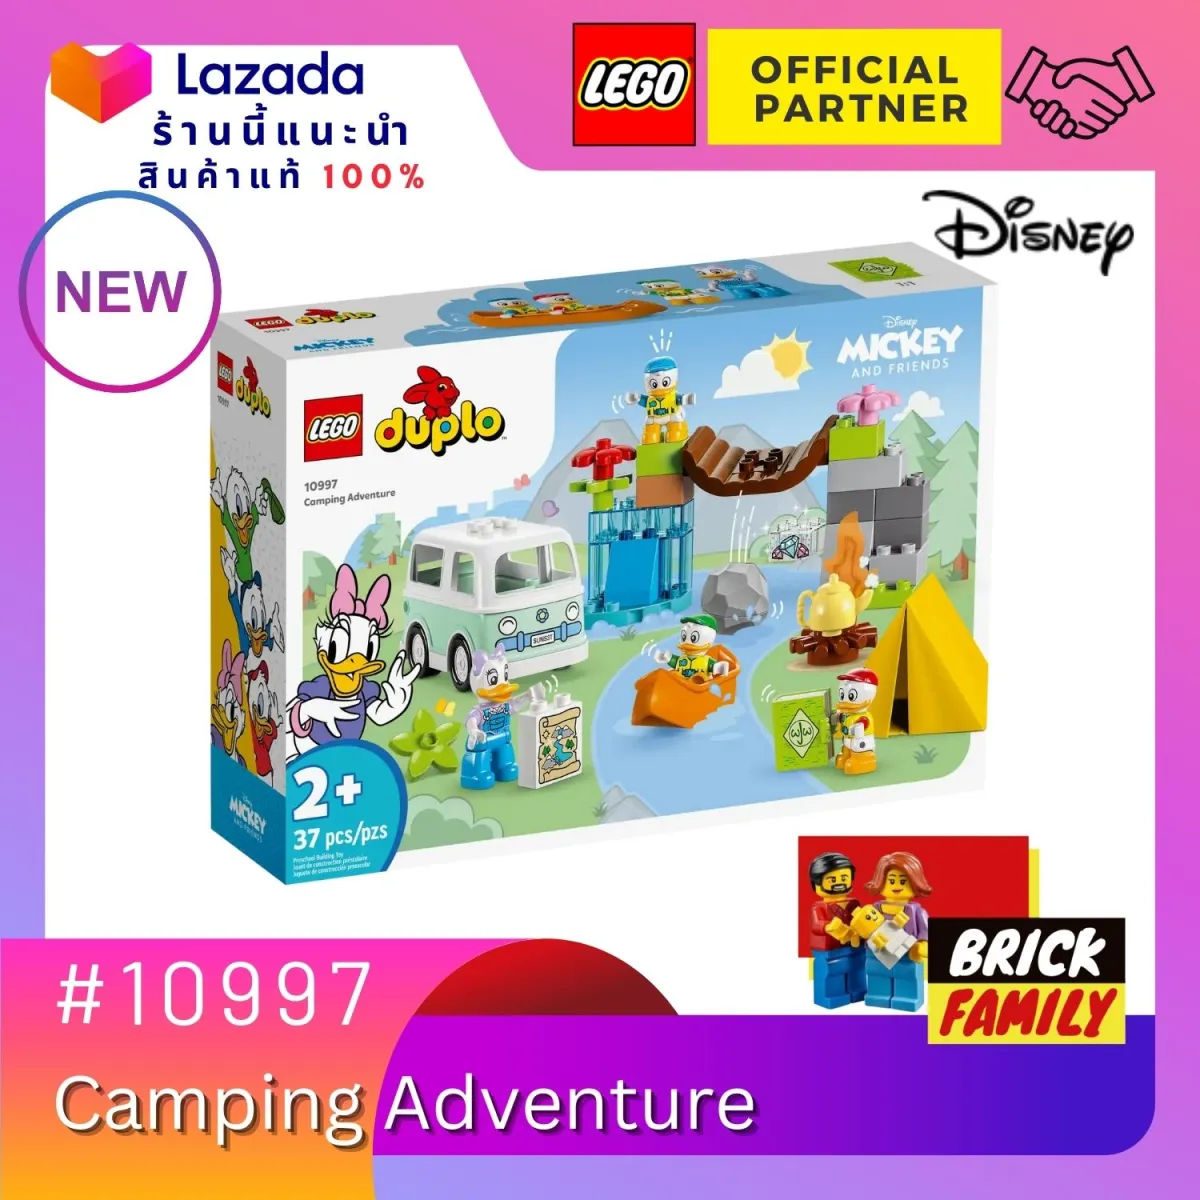 lærer Svømmepøl Gå en tur Lego 10997 Camping Adventure (Duplo x Disney) #lego10997 by Brick Family  Group | Lazada.co.th